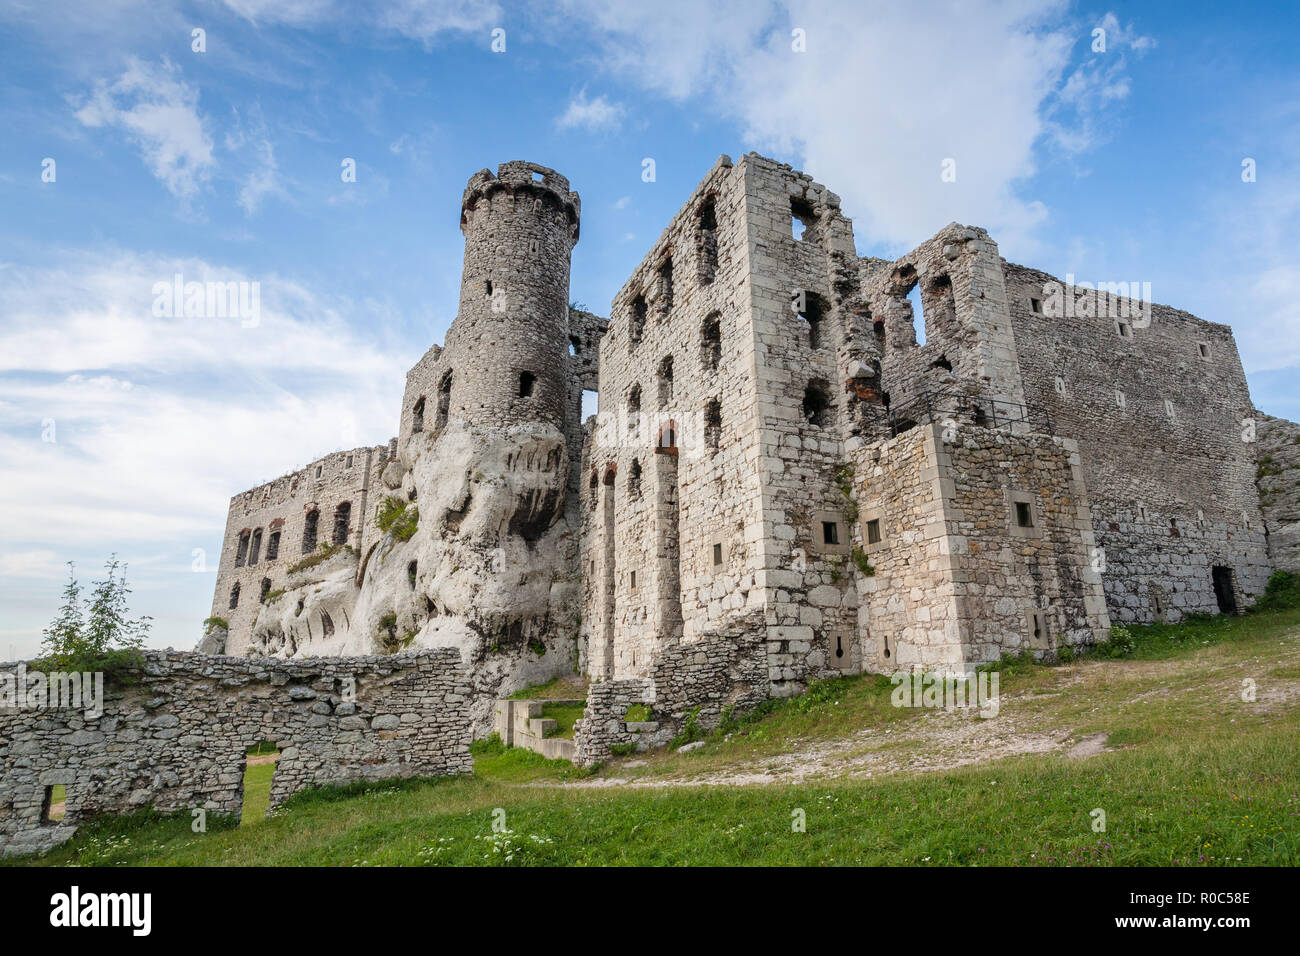 Ruins of the Ogrodzieniec Podzamcze medieval castle in Poland Stock Photo